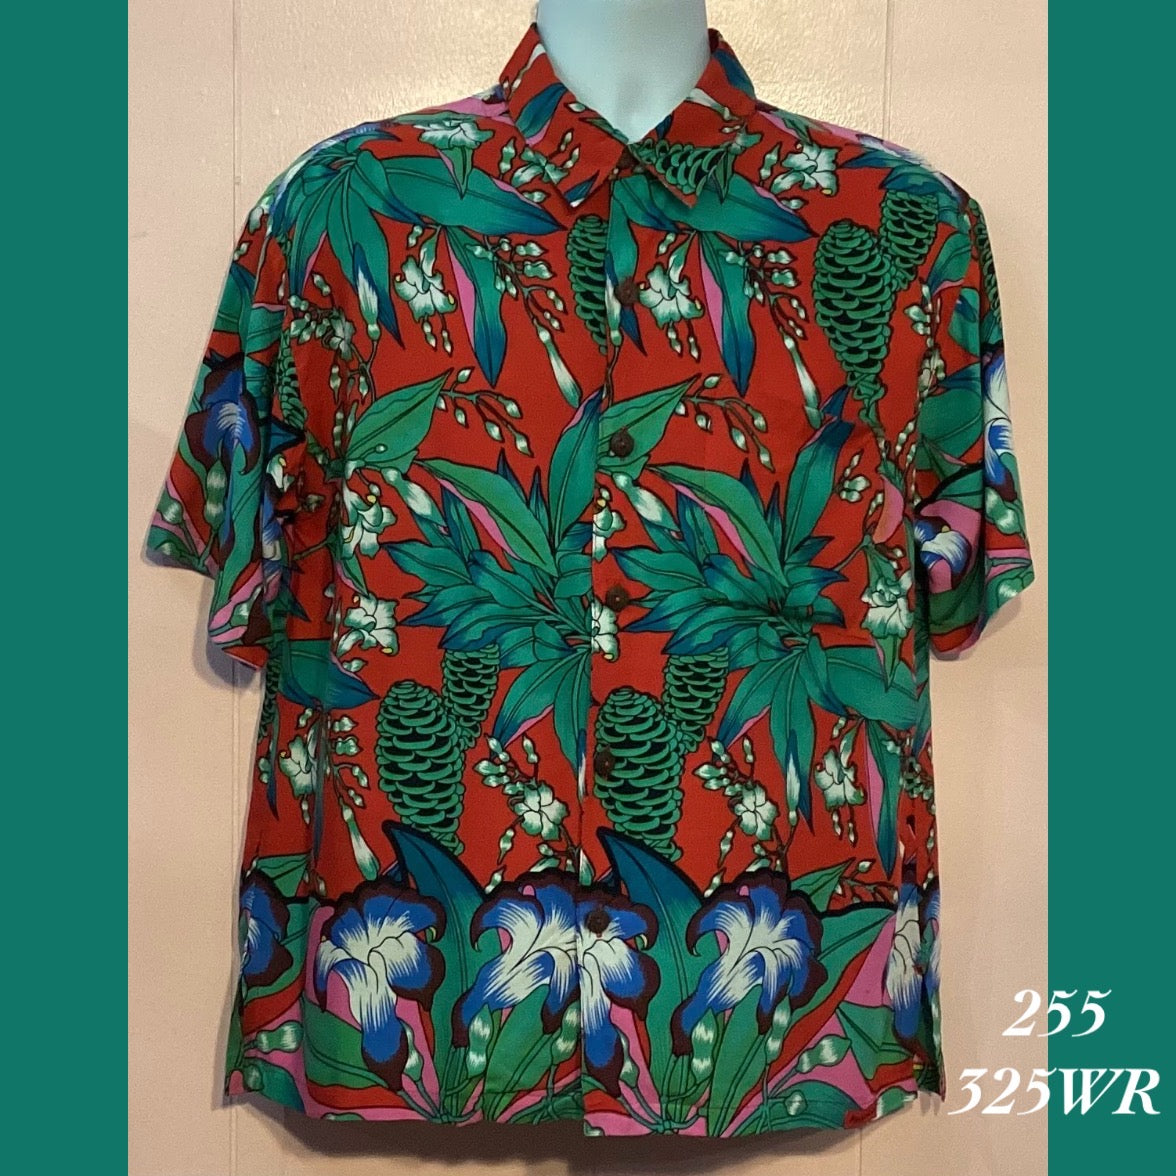 255 - 325WR , Men's Aloha shirt